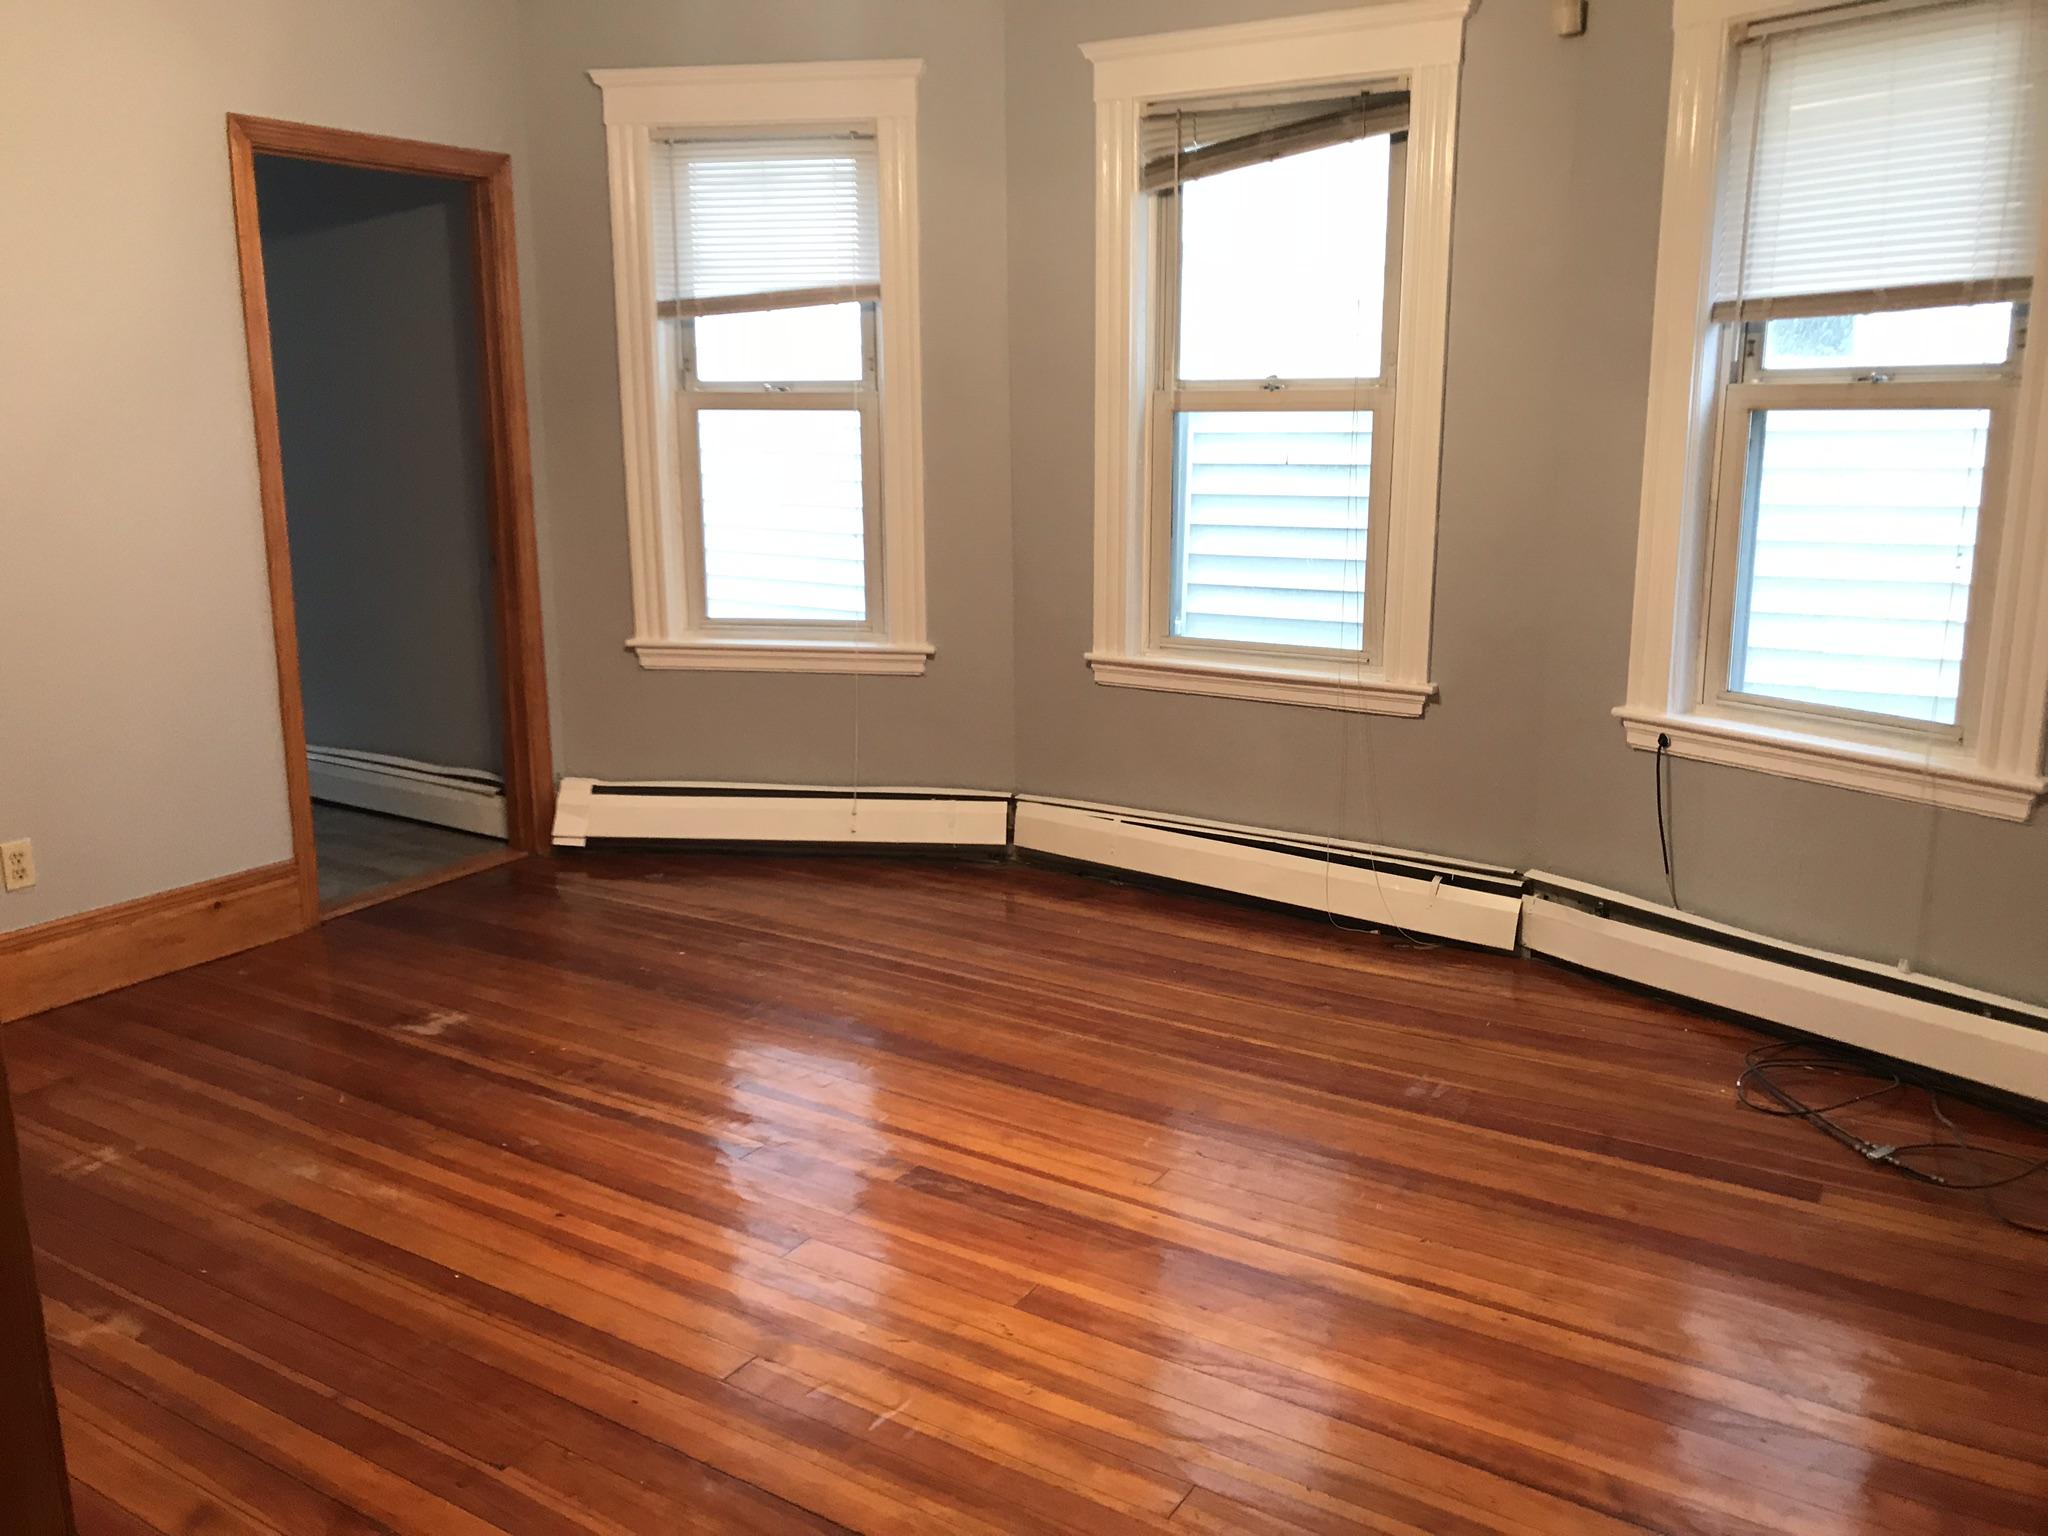 Photos of apartment on Dorchester Ave.,Boston MA 02124